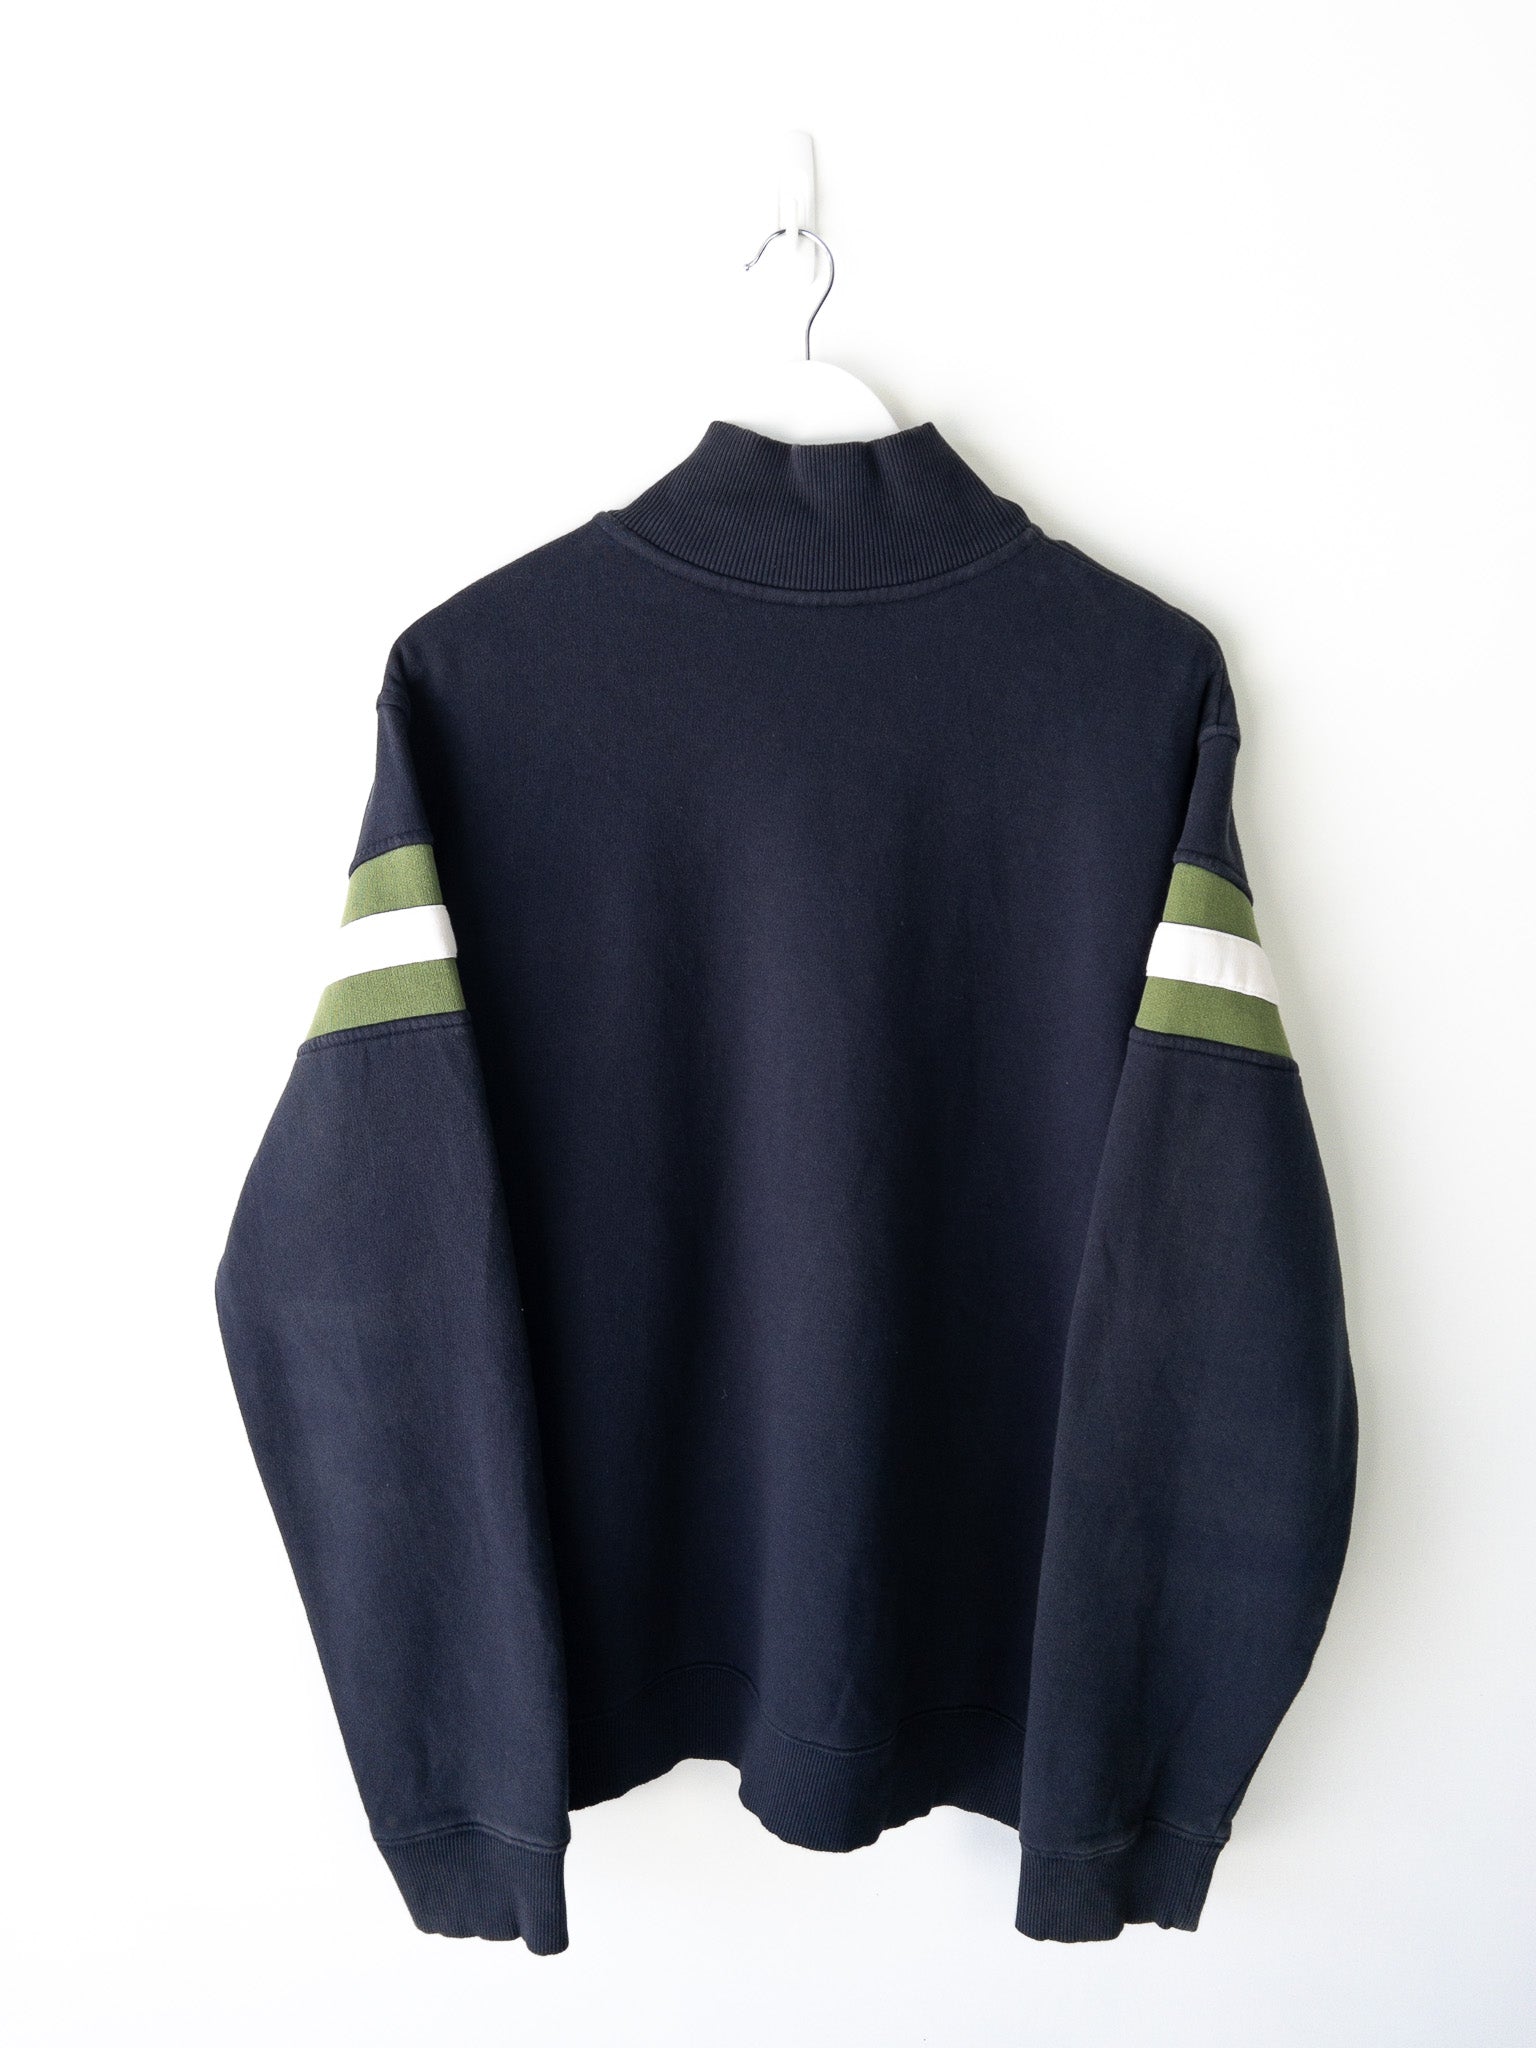 Vintage Timberland Zip Sweatshirt (L)